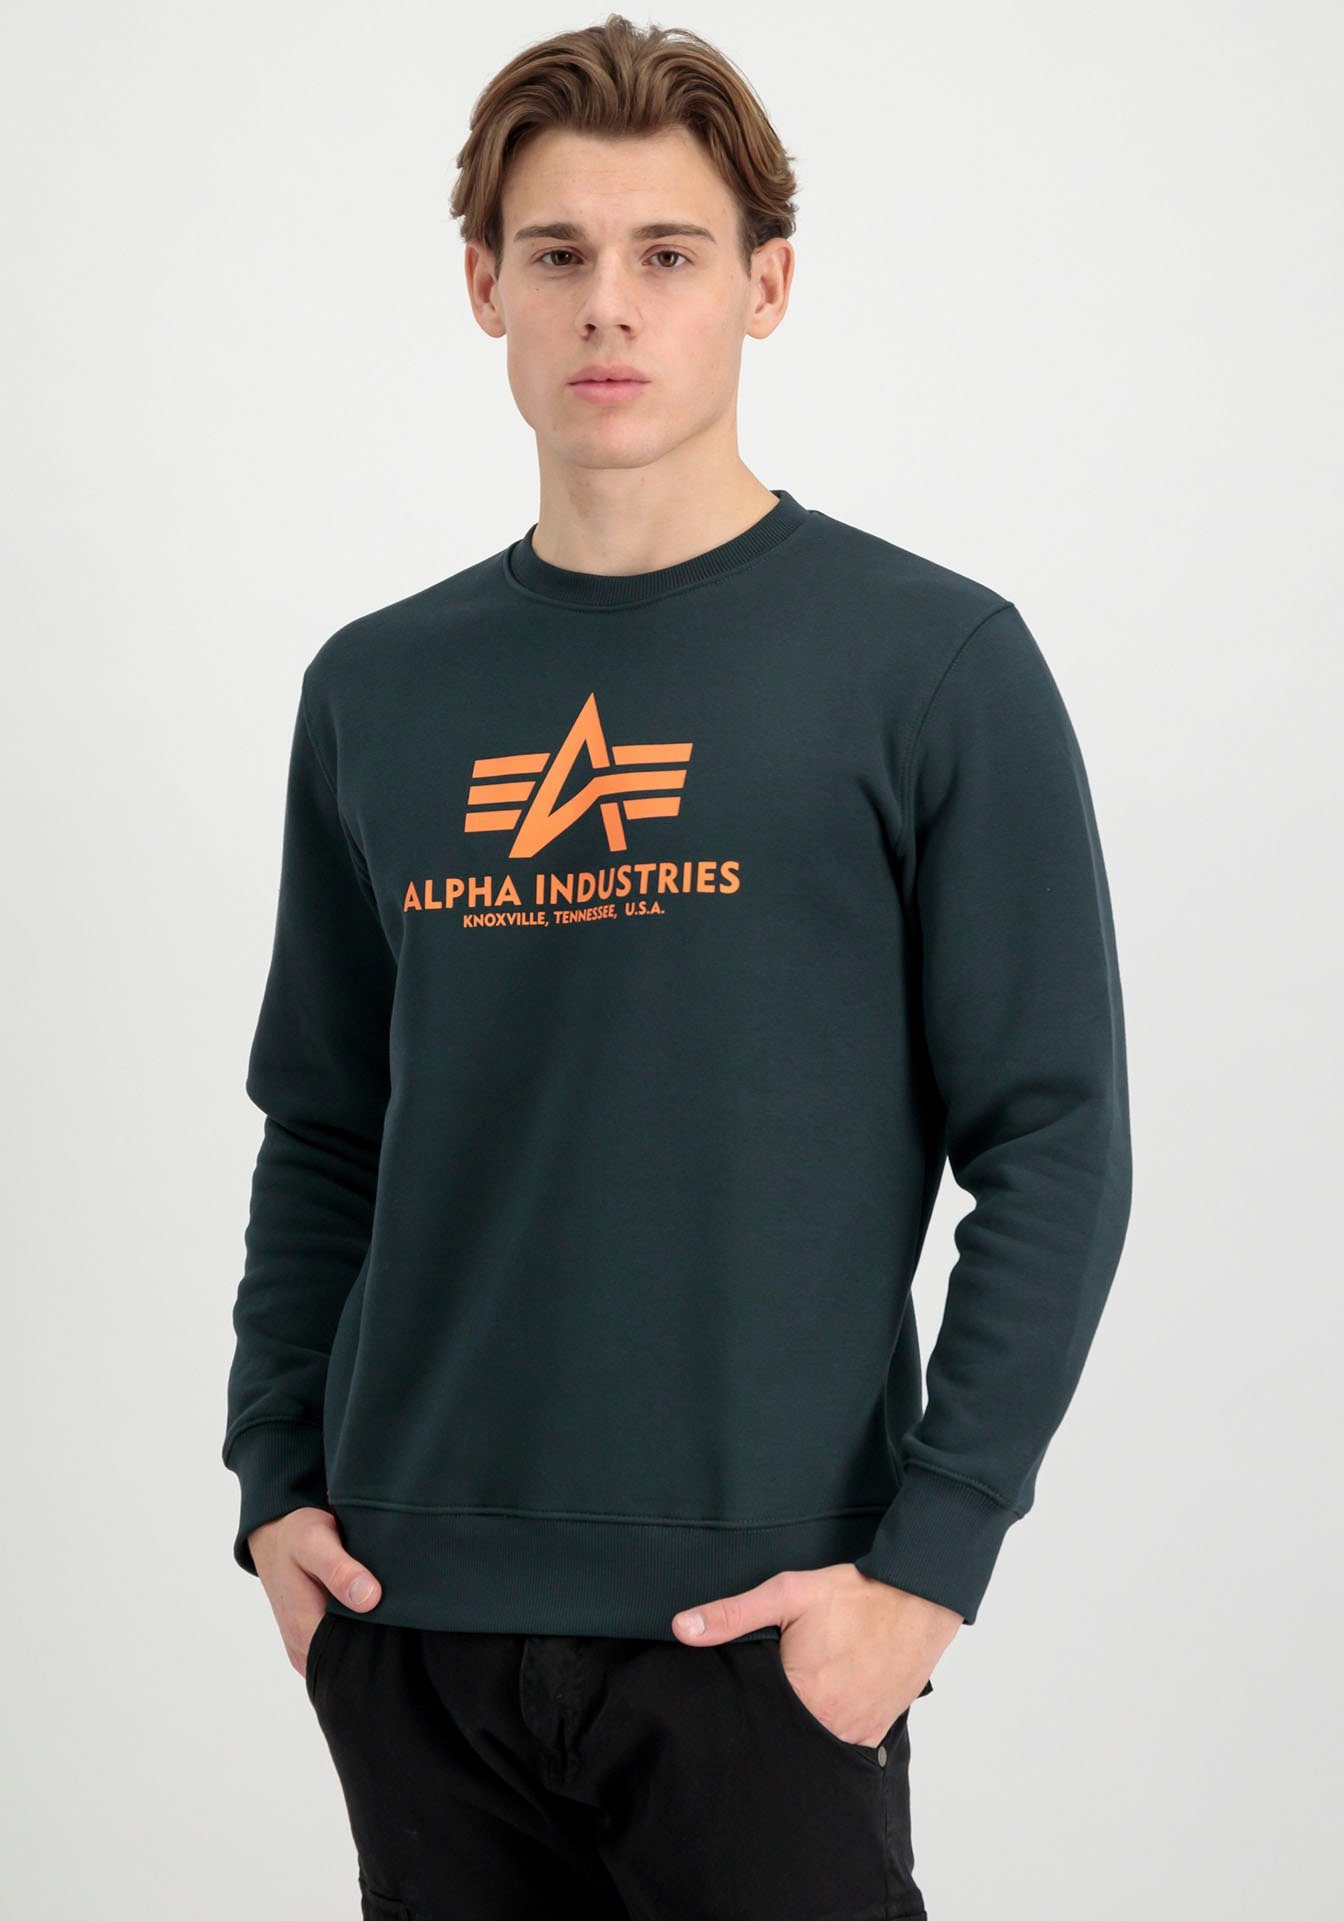 Industries petrol Sweatshirt dark Sweater Alpha Basic